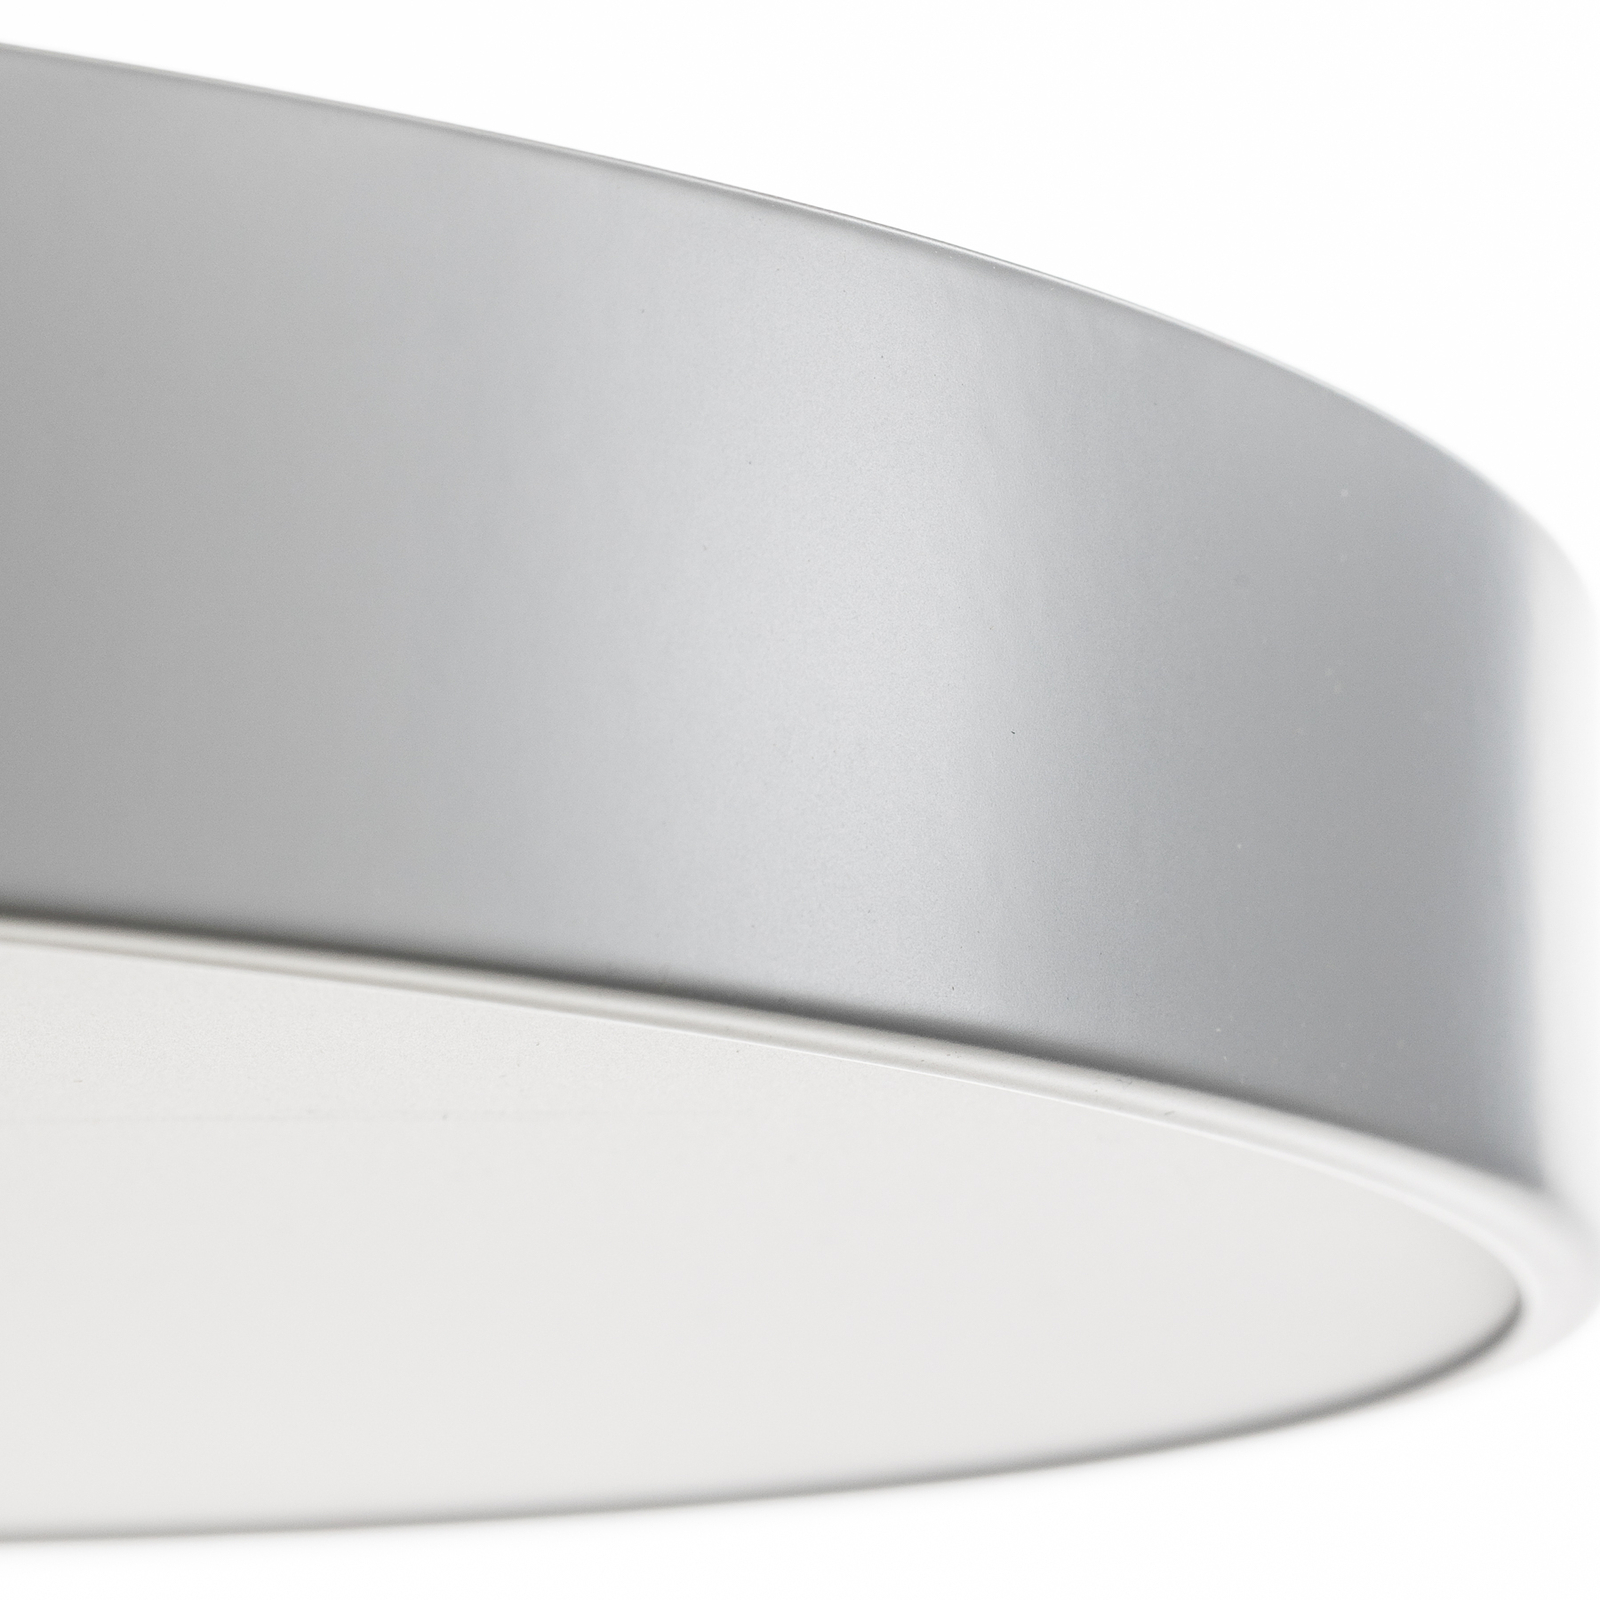 Stredná závesná LED lampa UMAGE Asteria Ultimate Grey